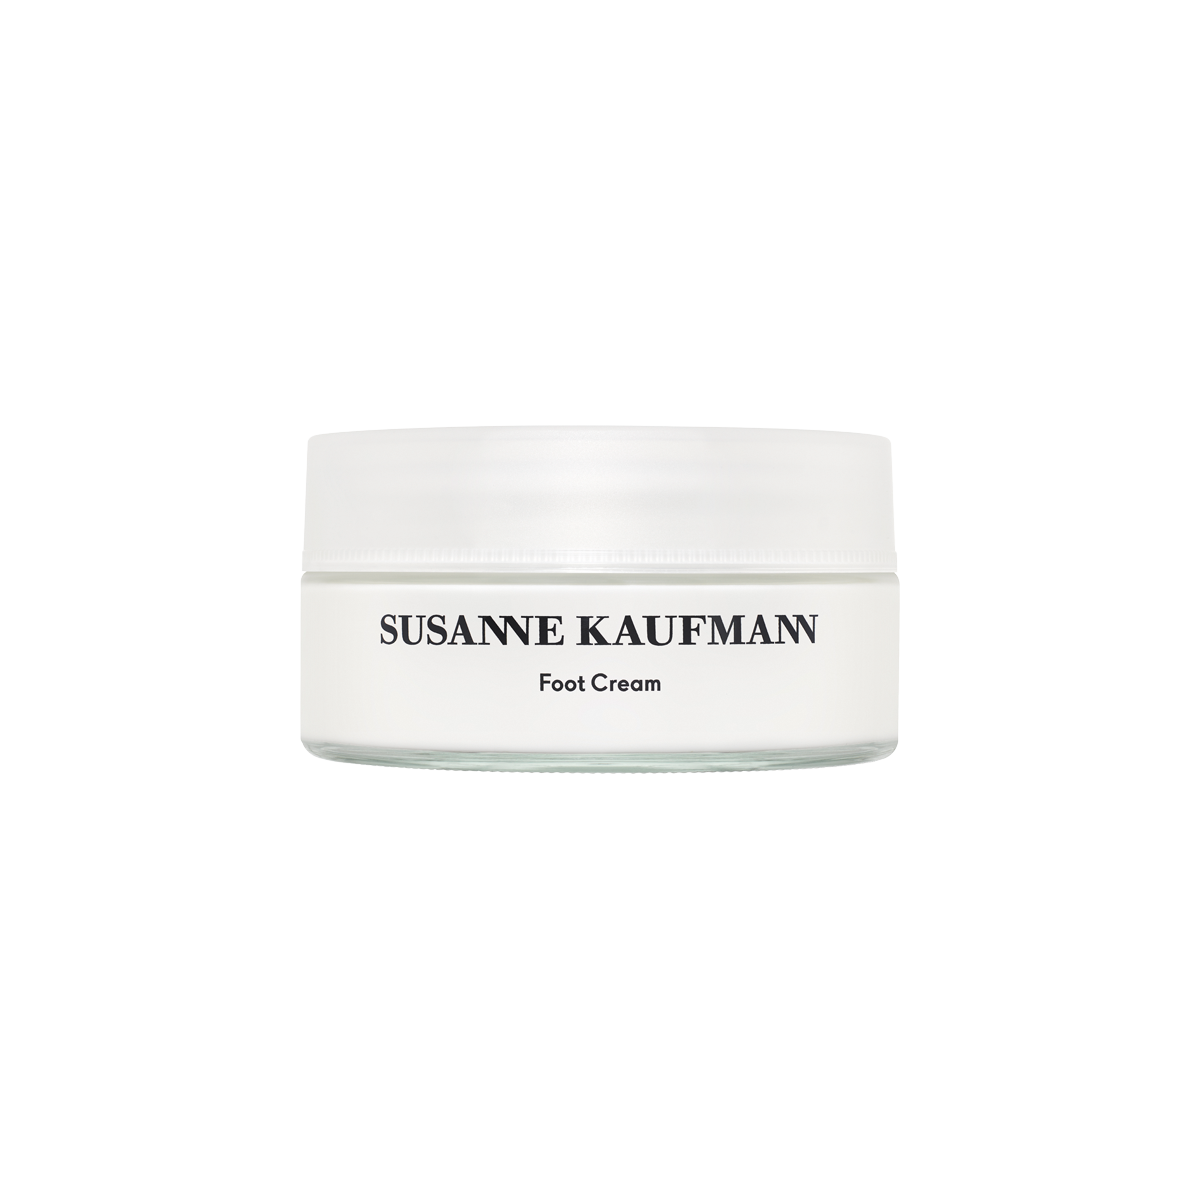 Susanne Kaufmann - Foot Cream